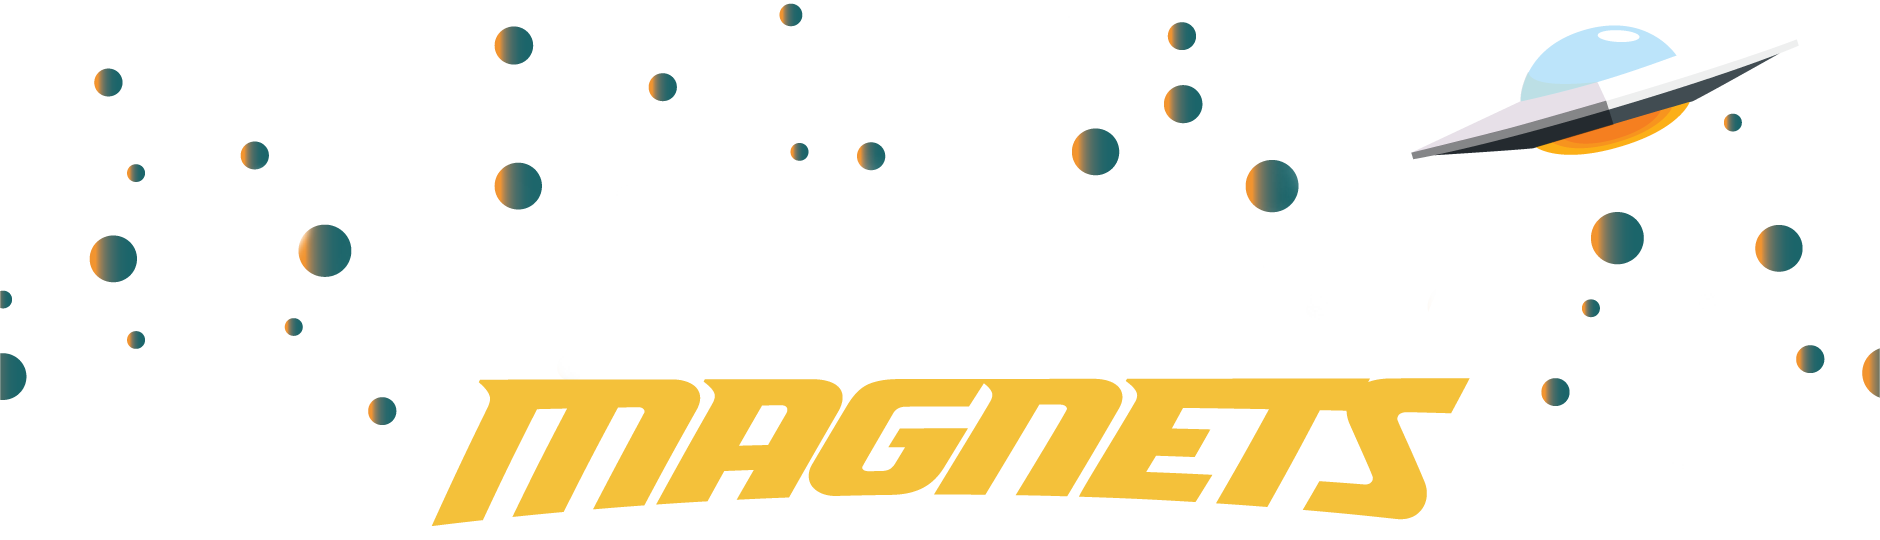 Solar system magnets logo